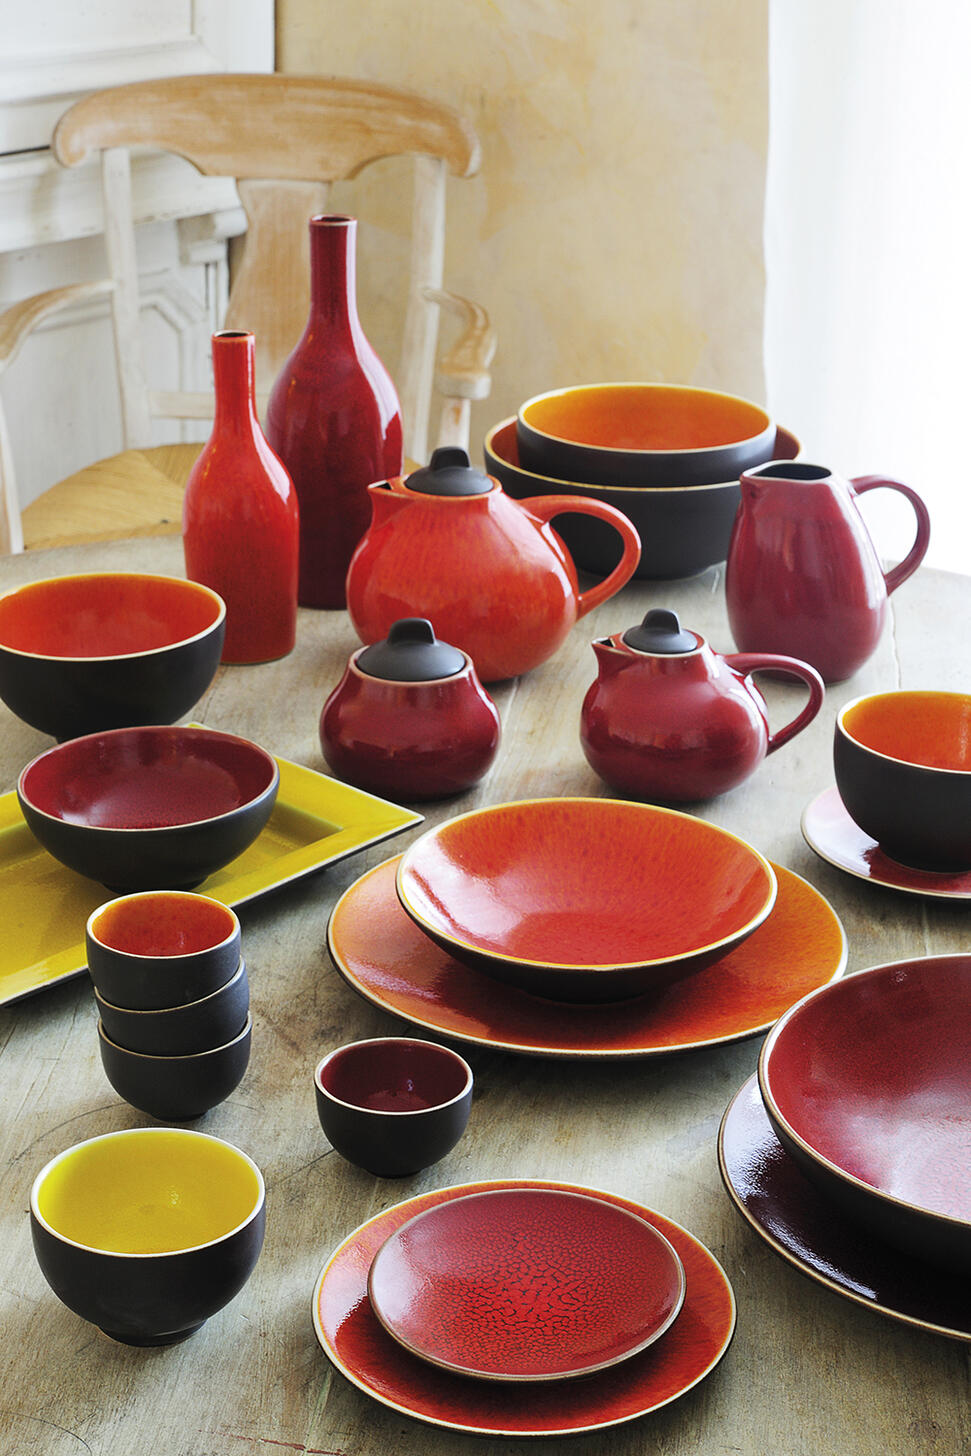 bowl l tourron orange ceramic manufacturer